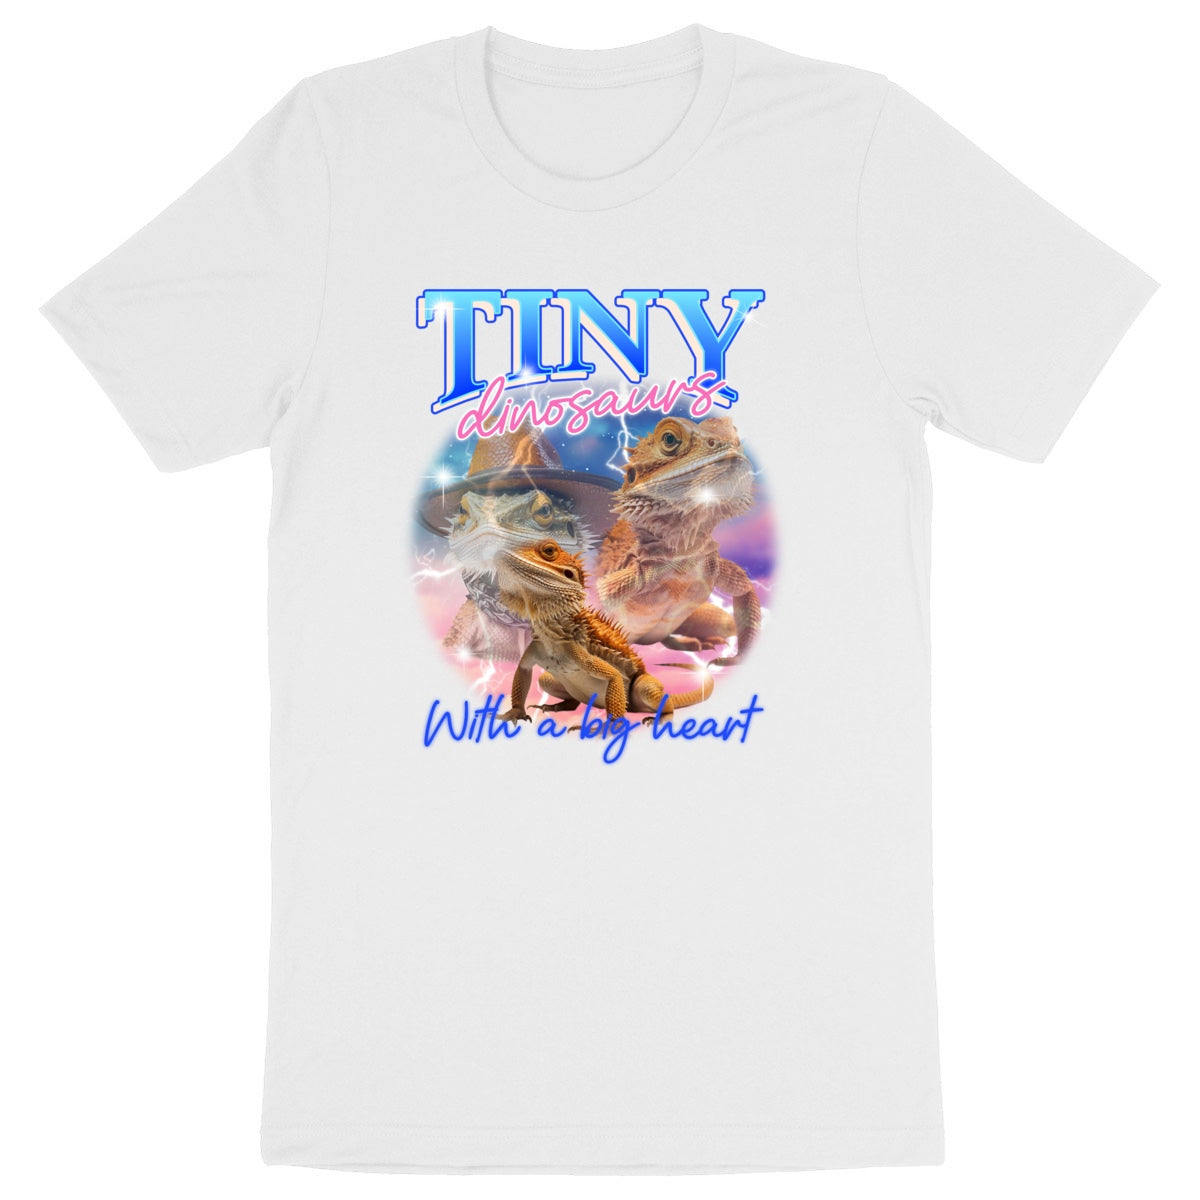 Tiny Dinosaurs - Organic T-shirt